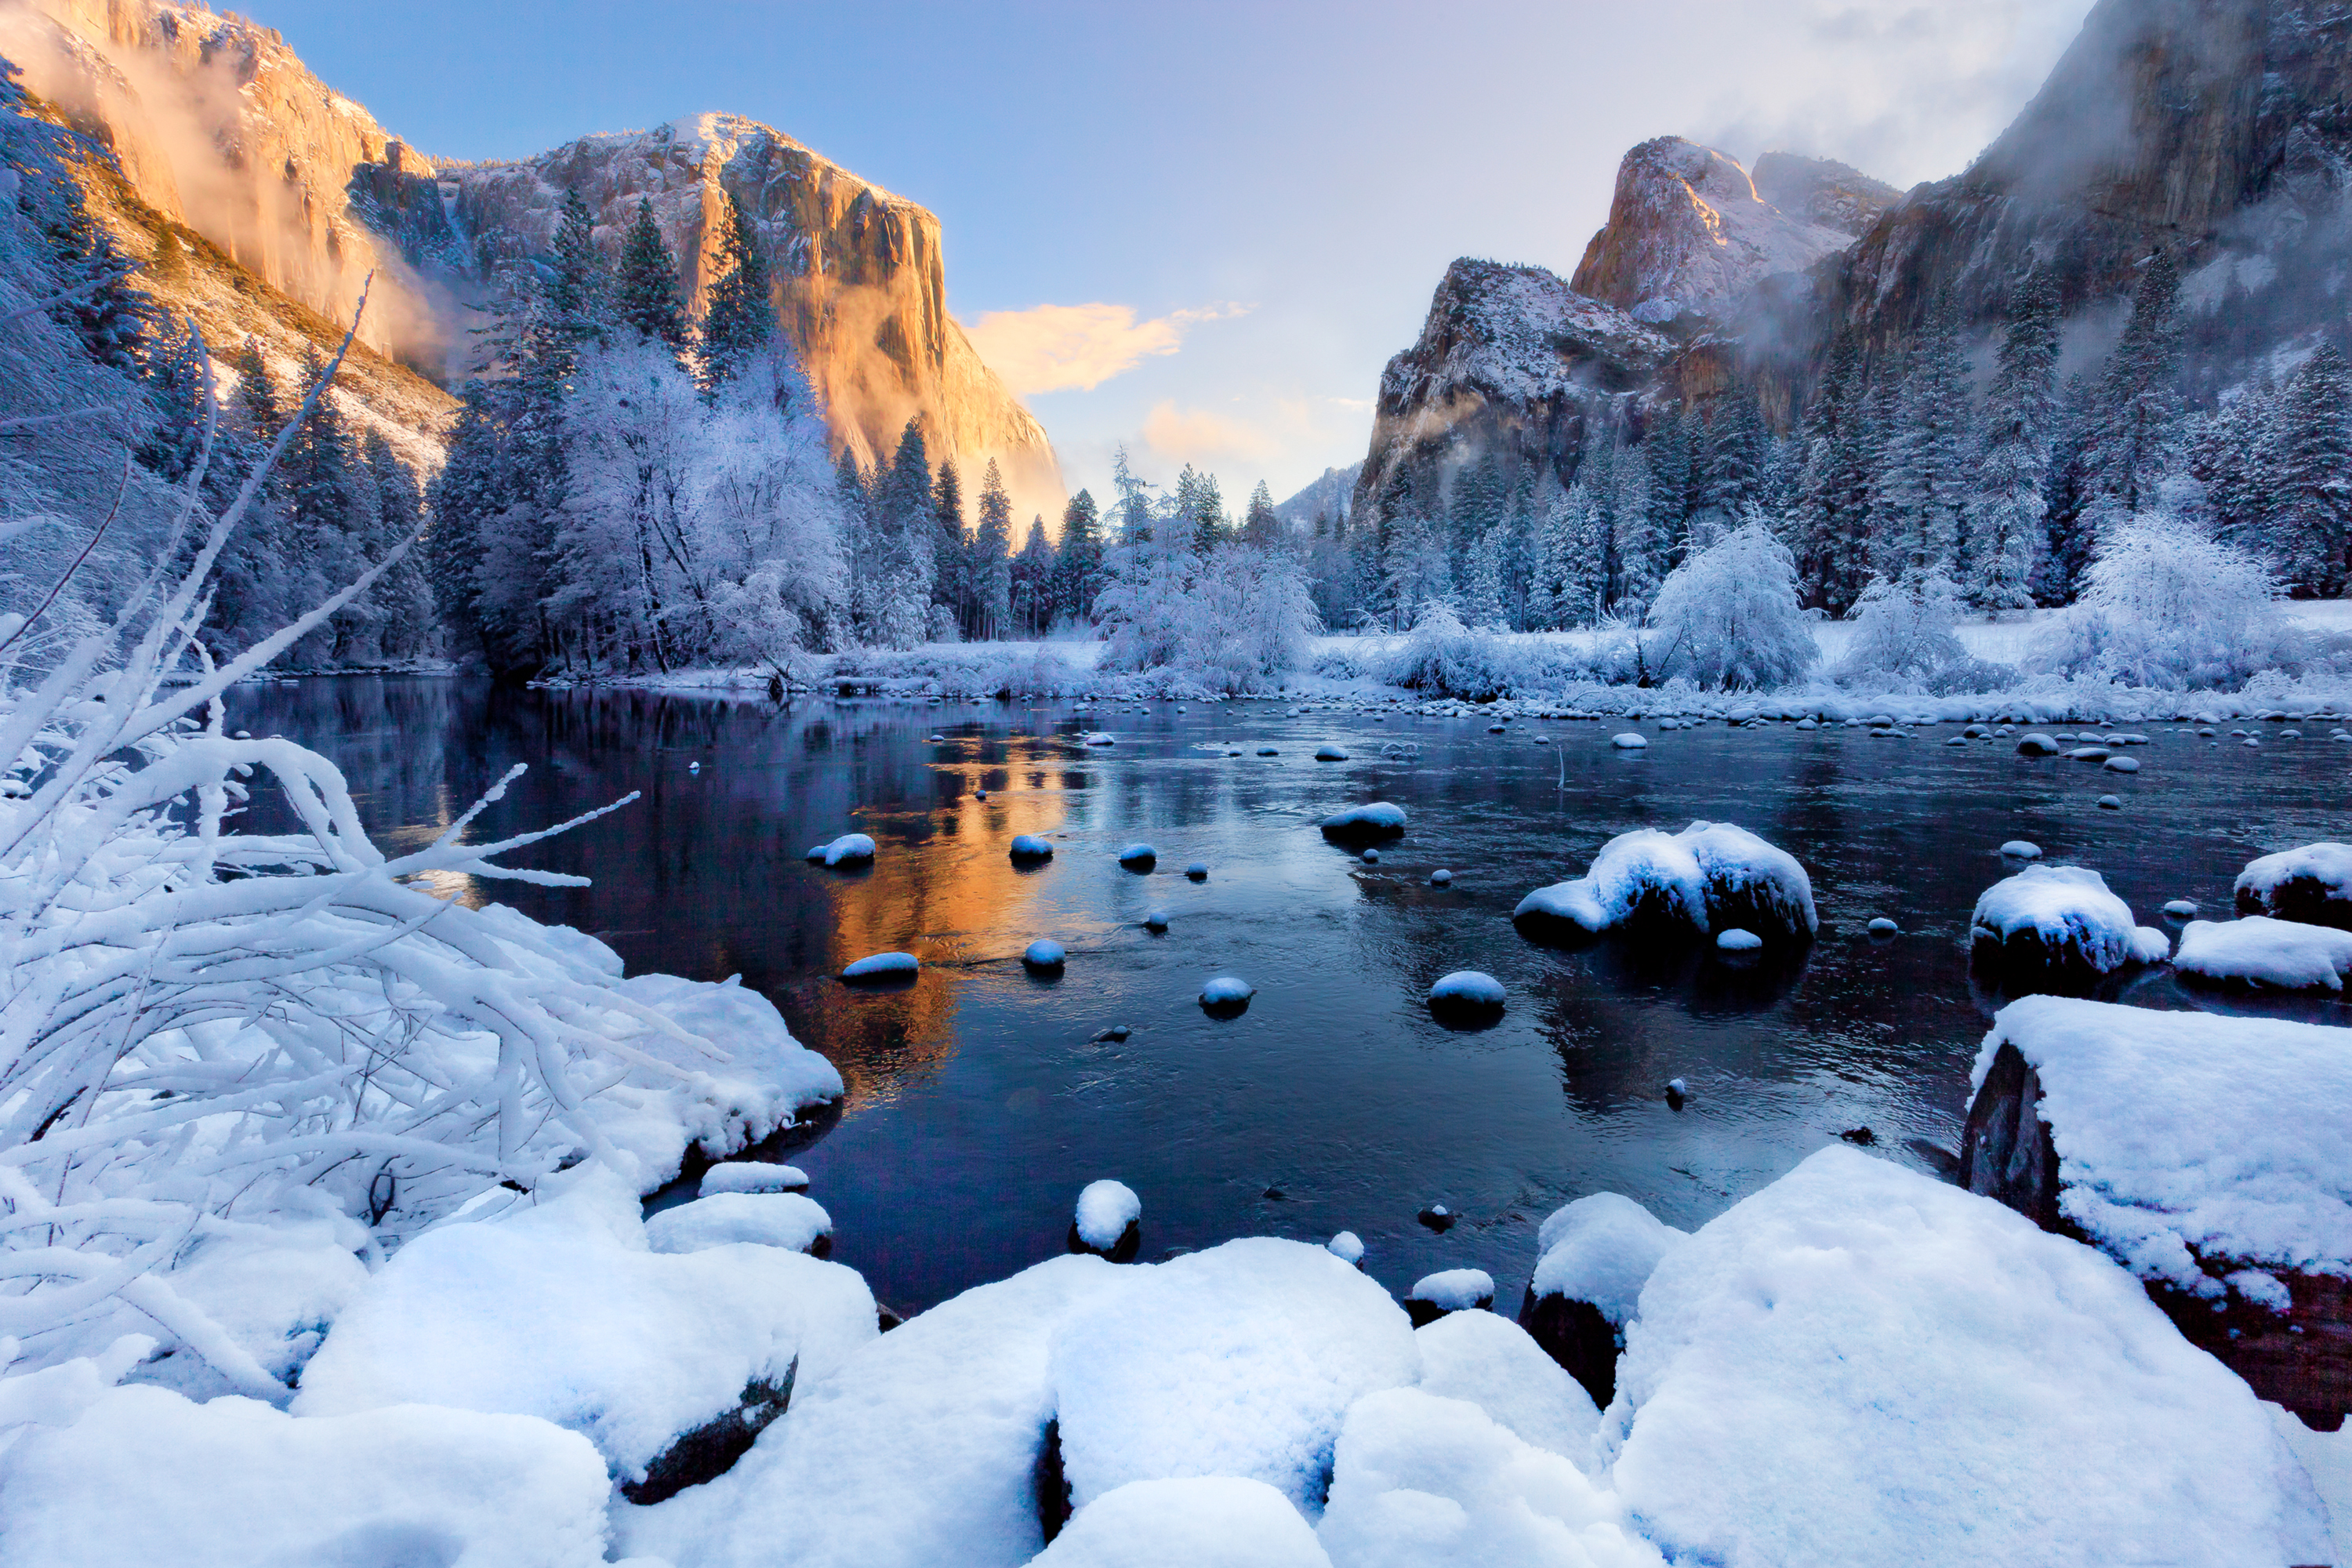 Yosemite Winter Picture On Wallpaper Hd 3000 X 2000 - Yosemite National Park Snowing - HD Wallpaper 